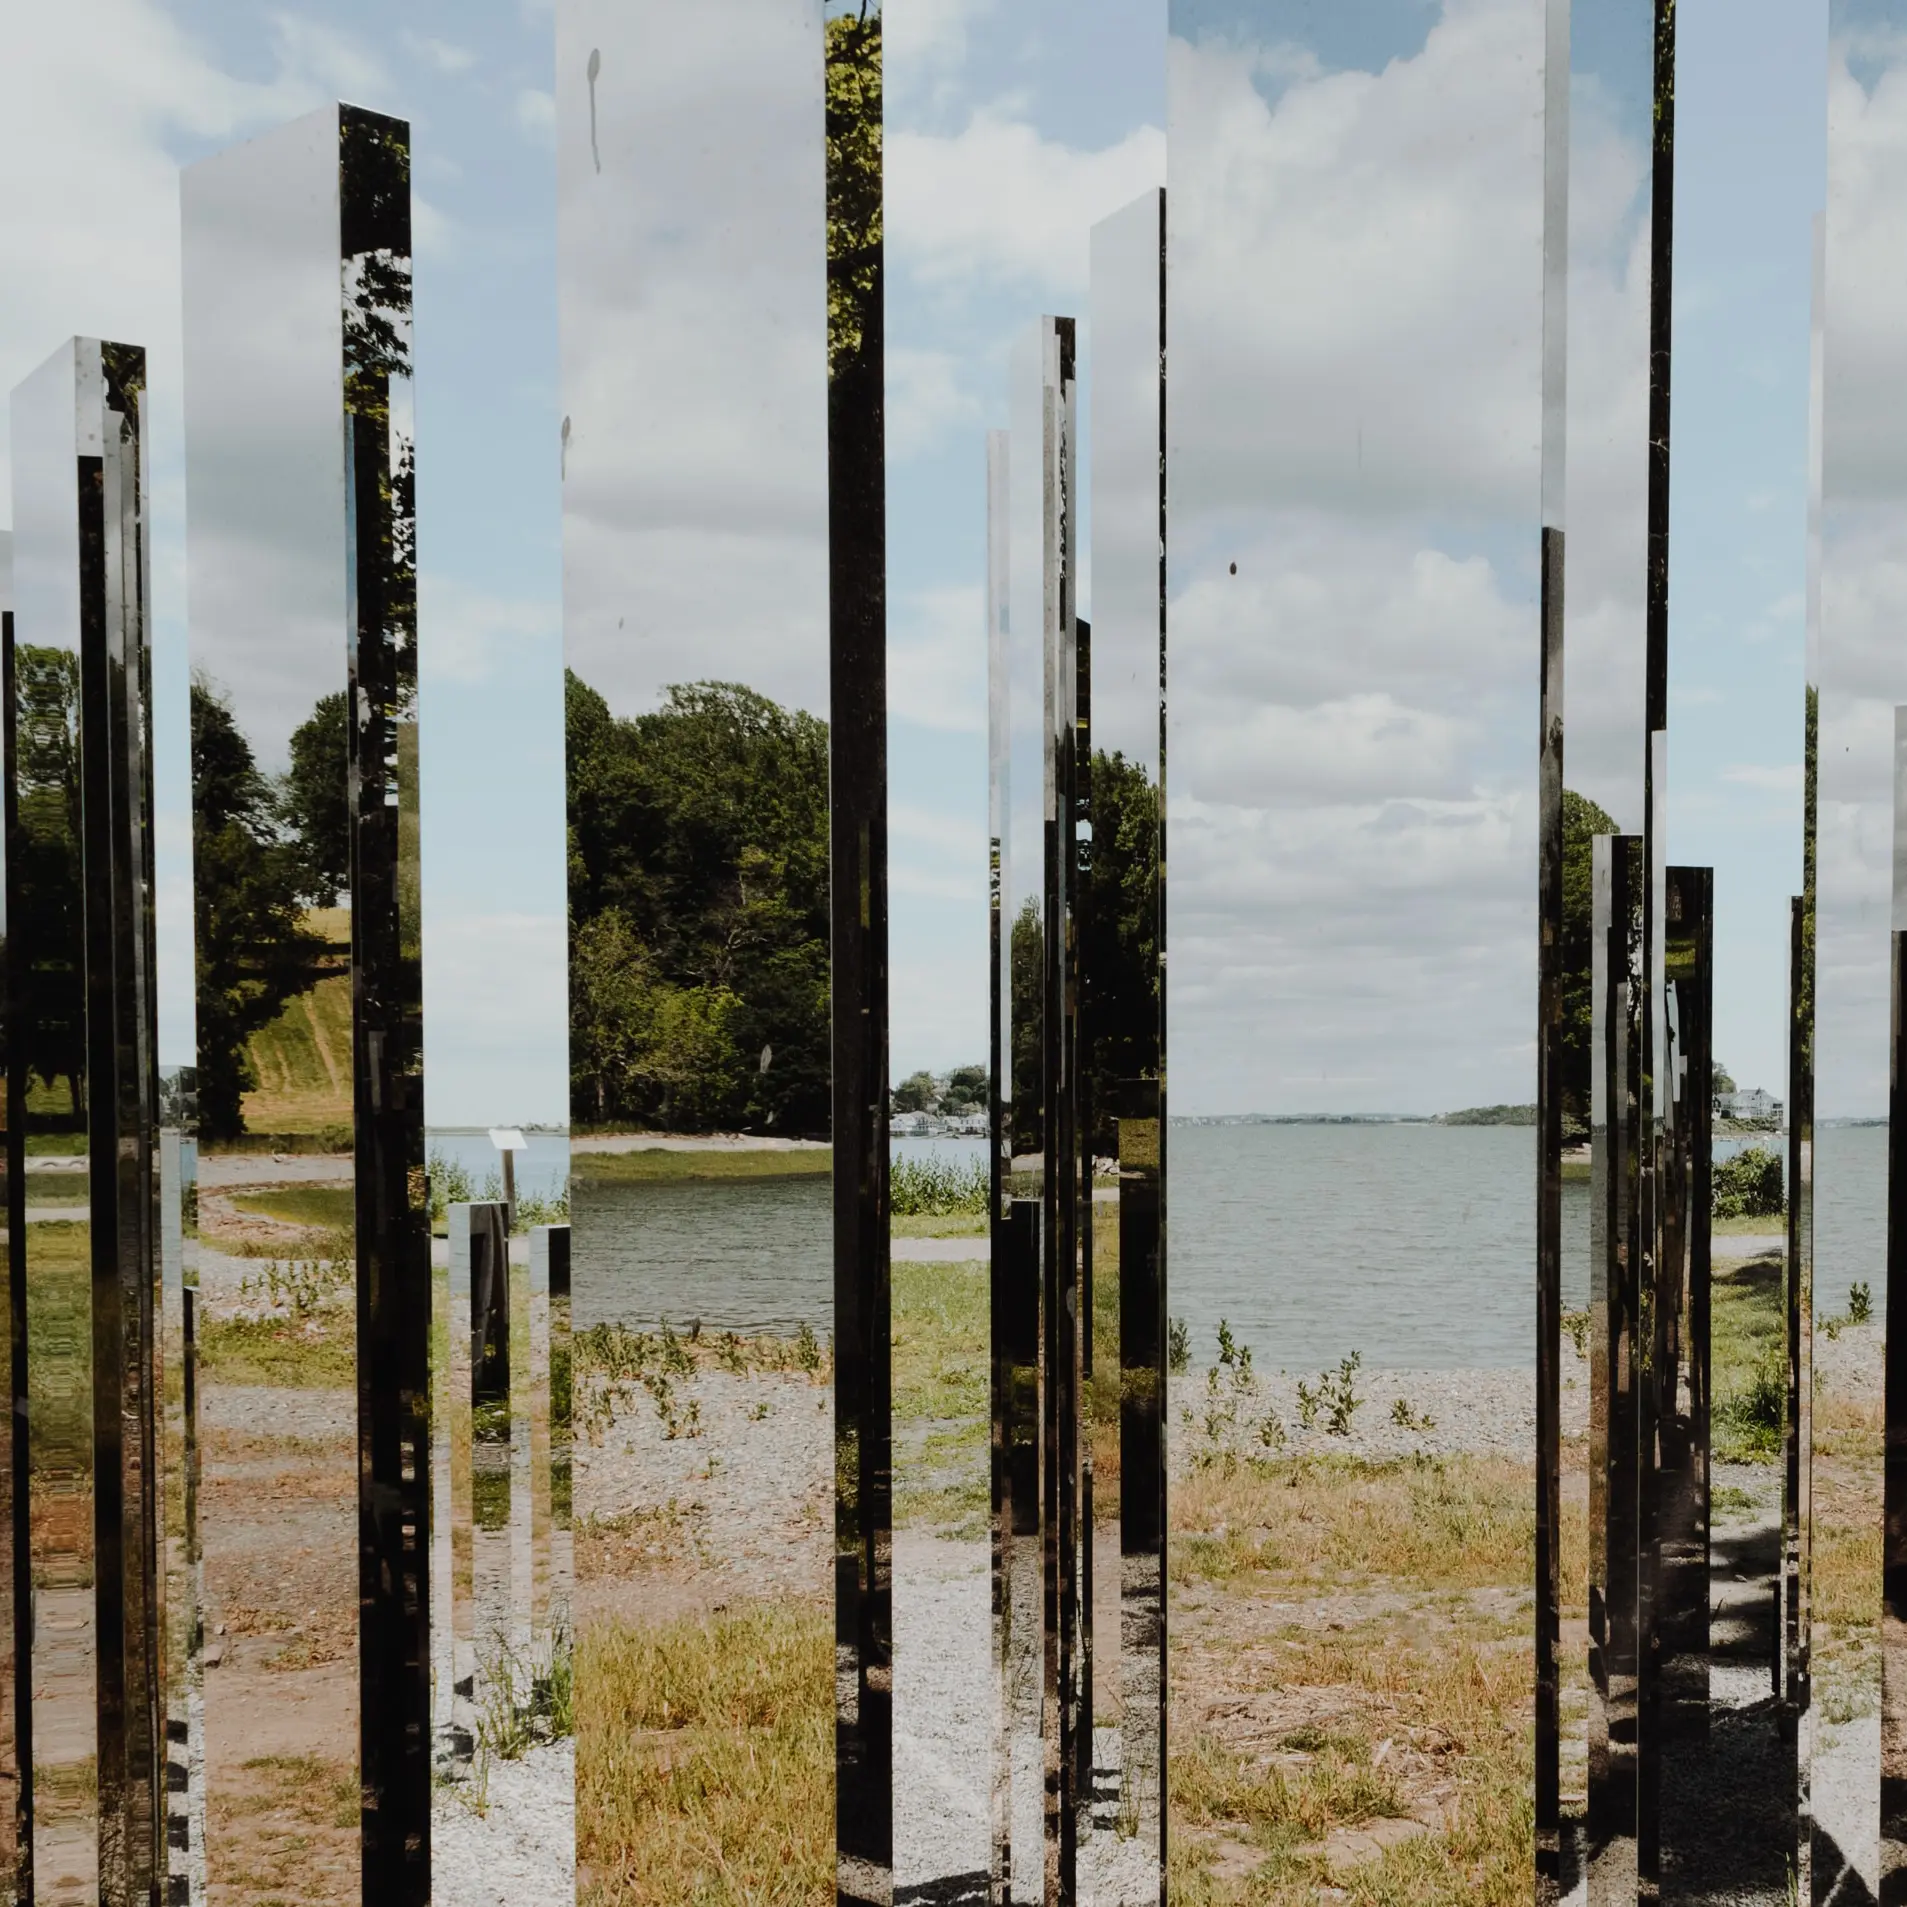 Mirrored art installation